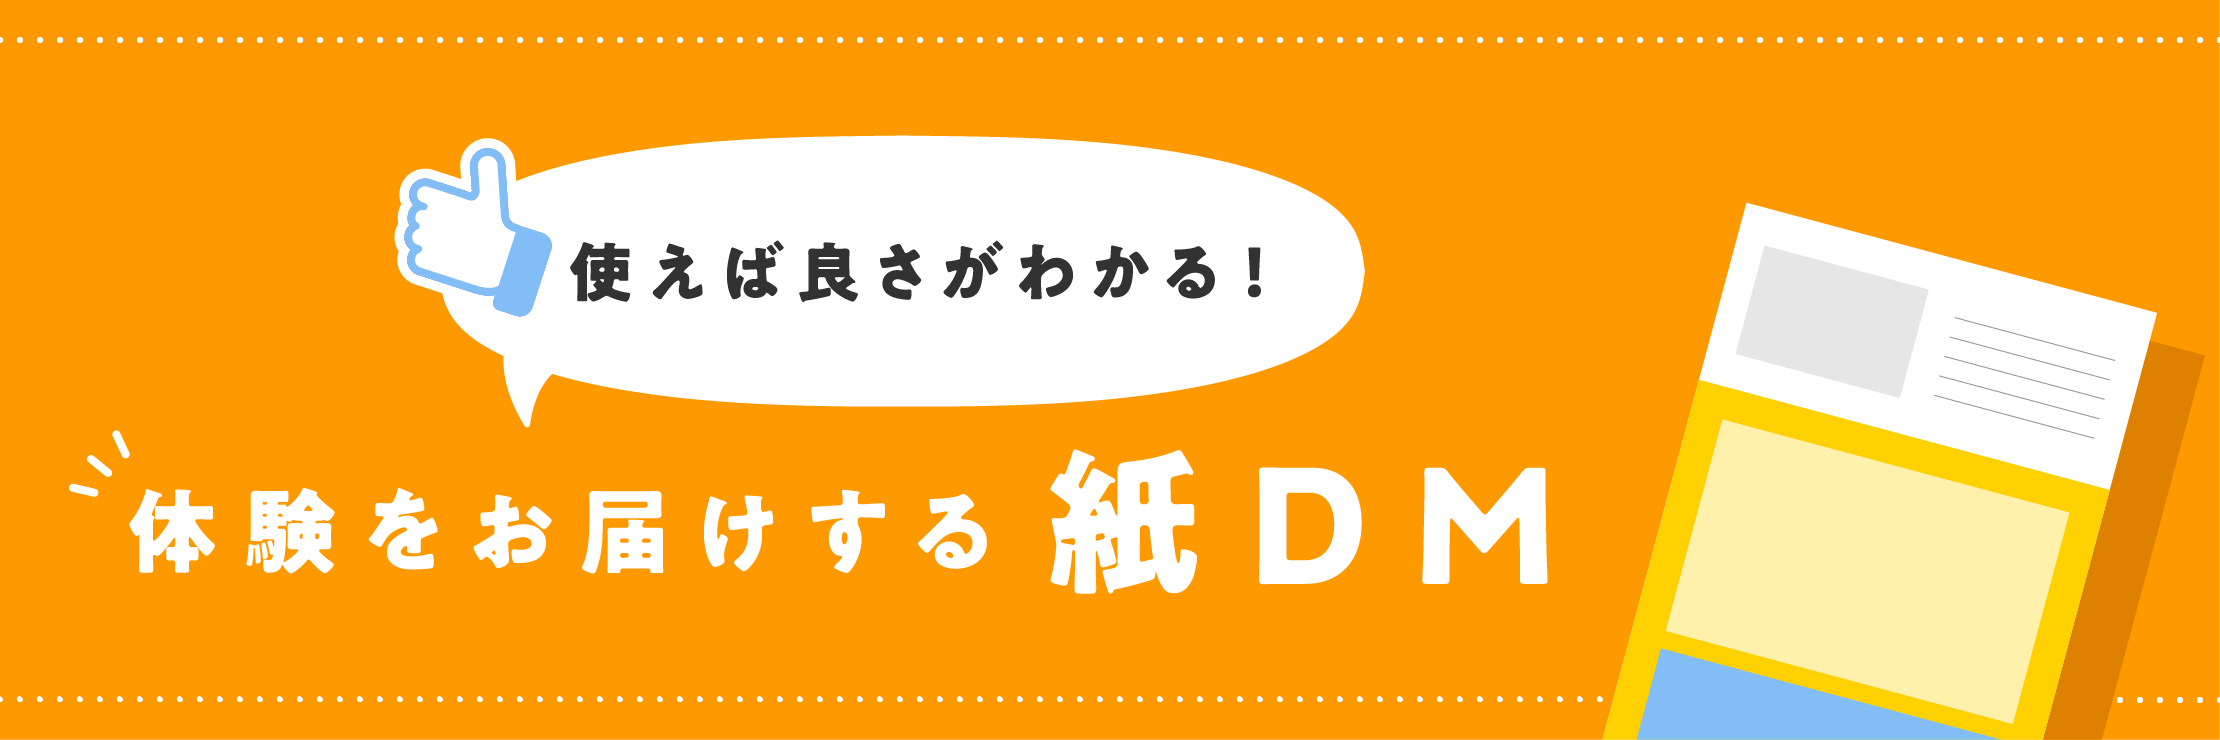 Yamato Dialog & Media Co.,Ltd.